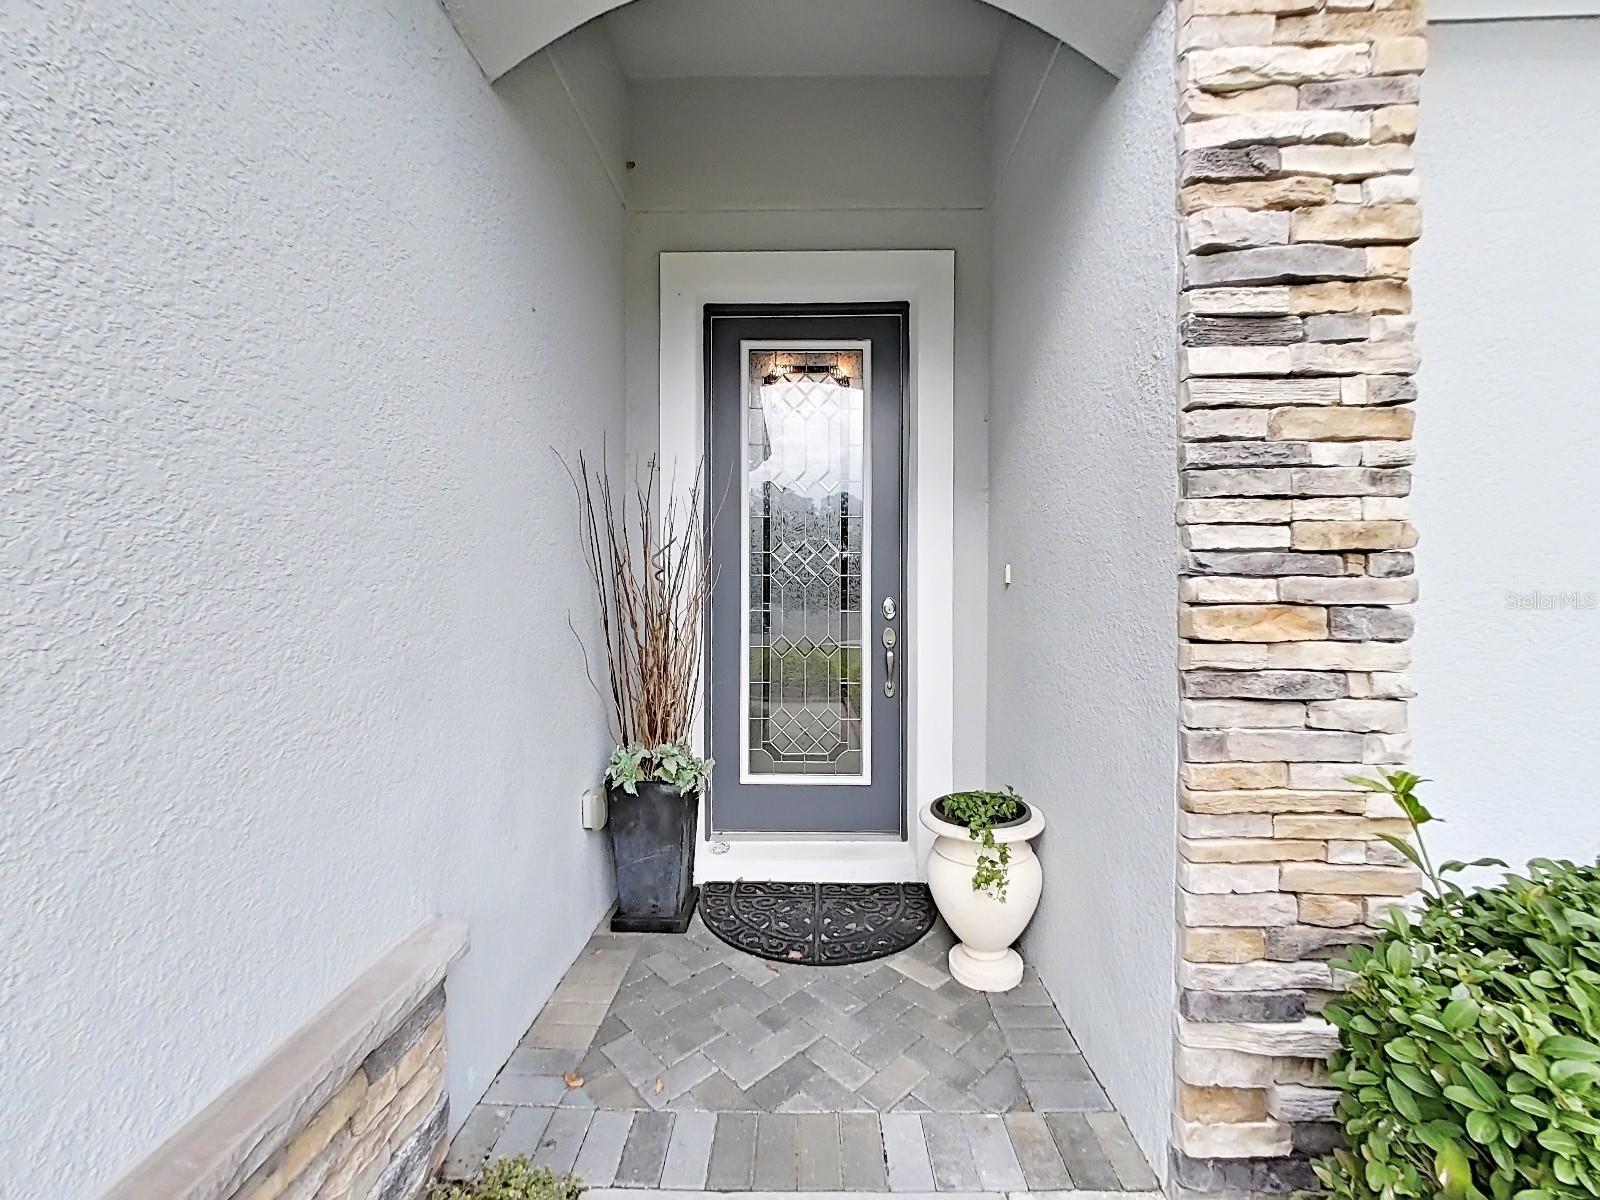 Flagstone Accent, Slate Floor Tile & Leaded Glass Door = Welcoming Entry